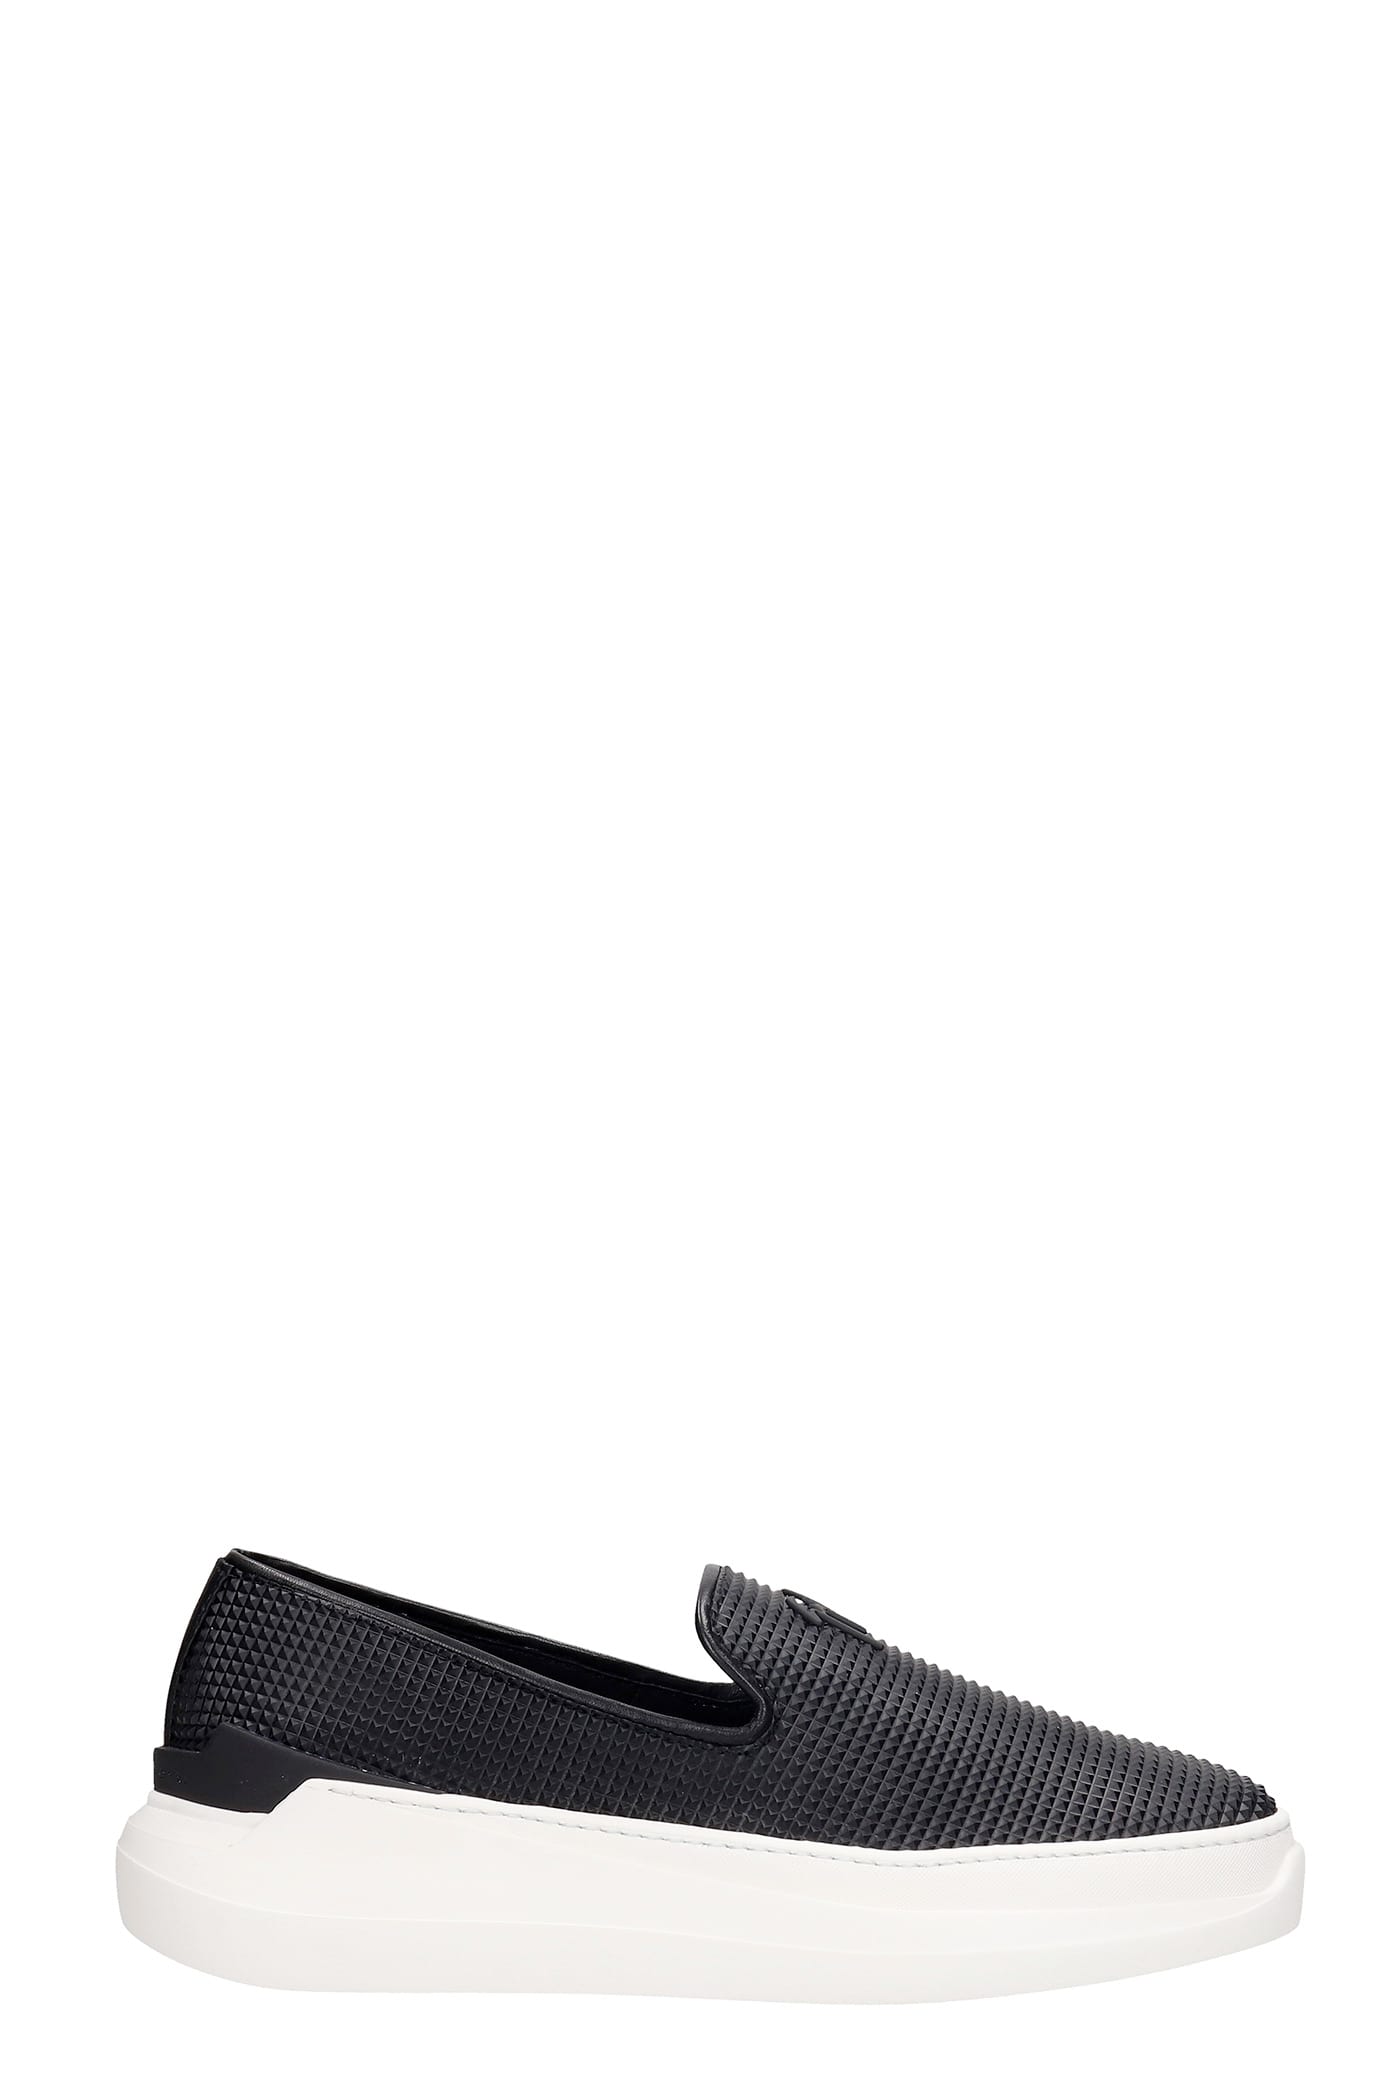 Giuseppe Zanotti Conley Sneakers In Black Leather